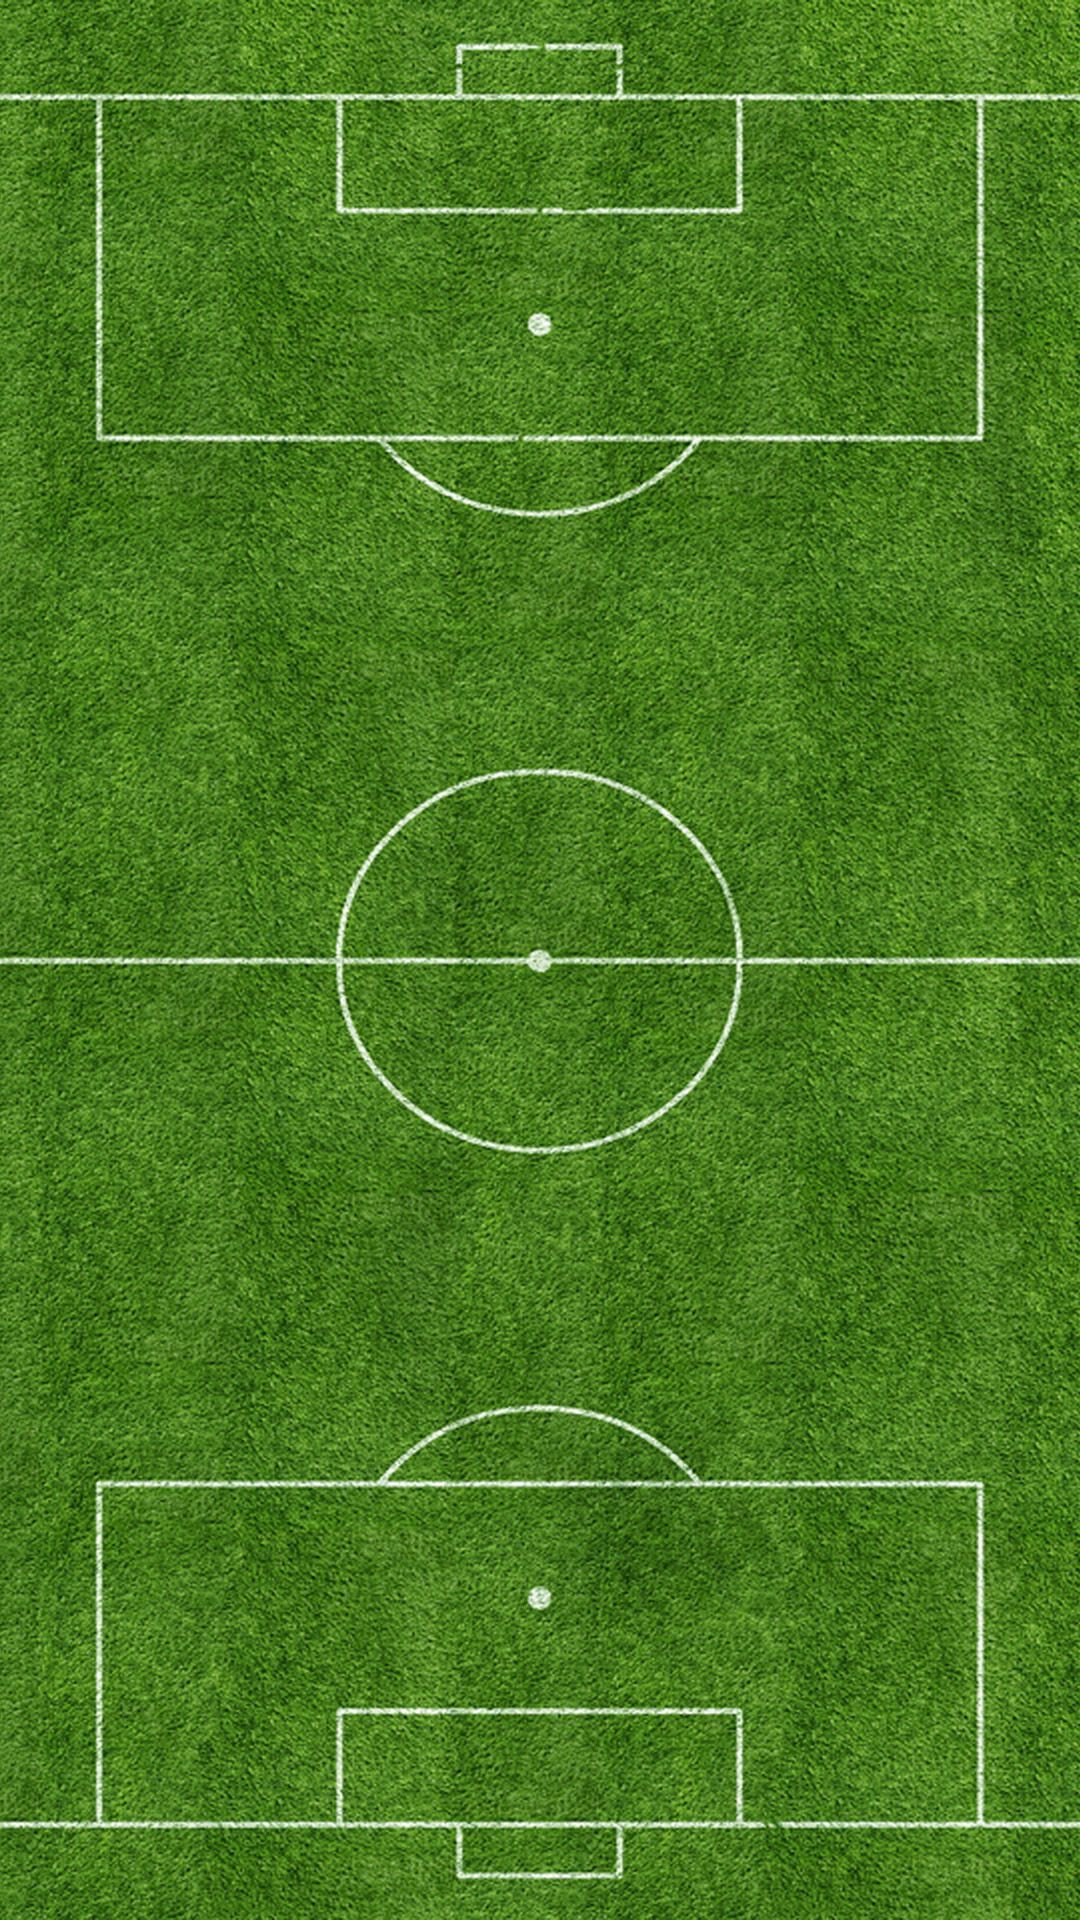 Soccer field. iPhone Wallpaper. Football wallpaper iphone, Football wallpaper, Field wallpaper